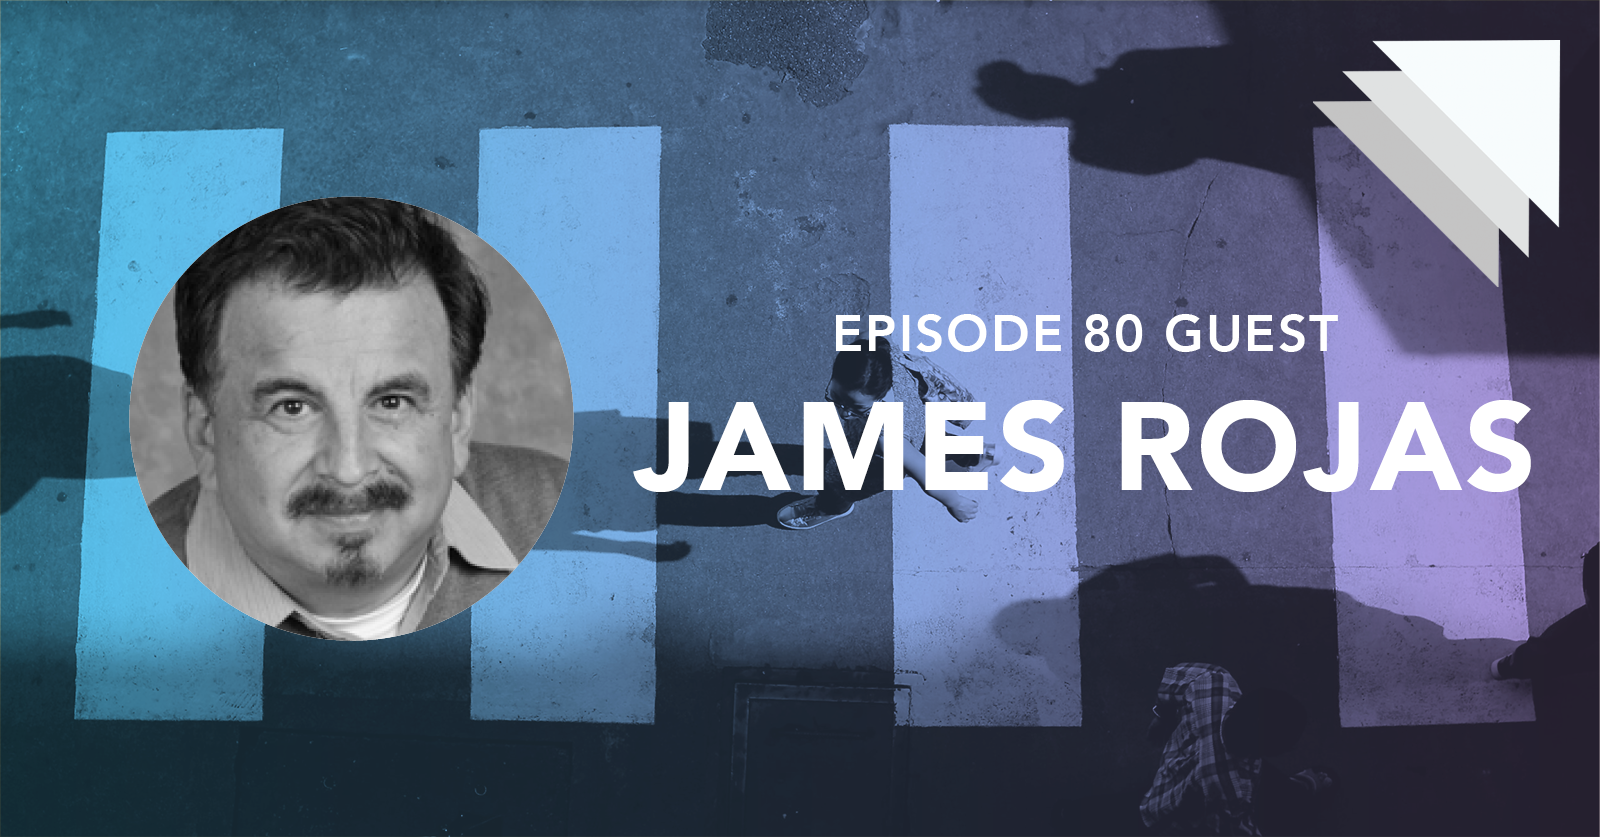 Episode 80 guest James Rojas